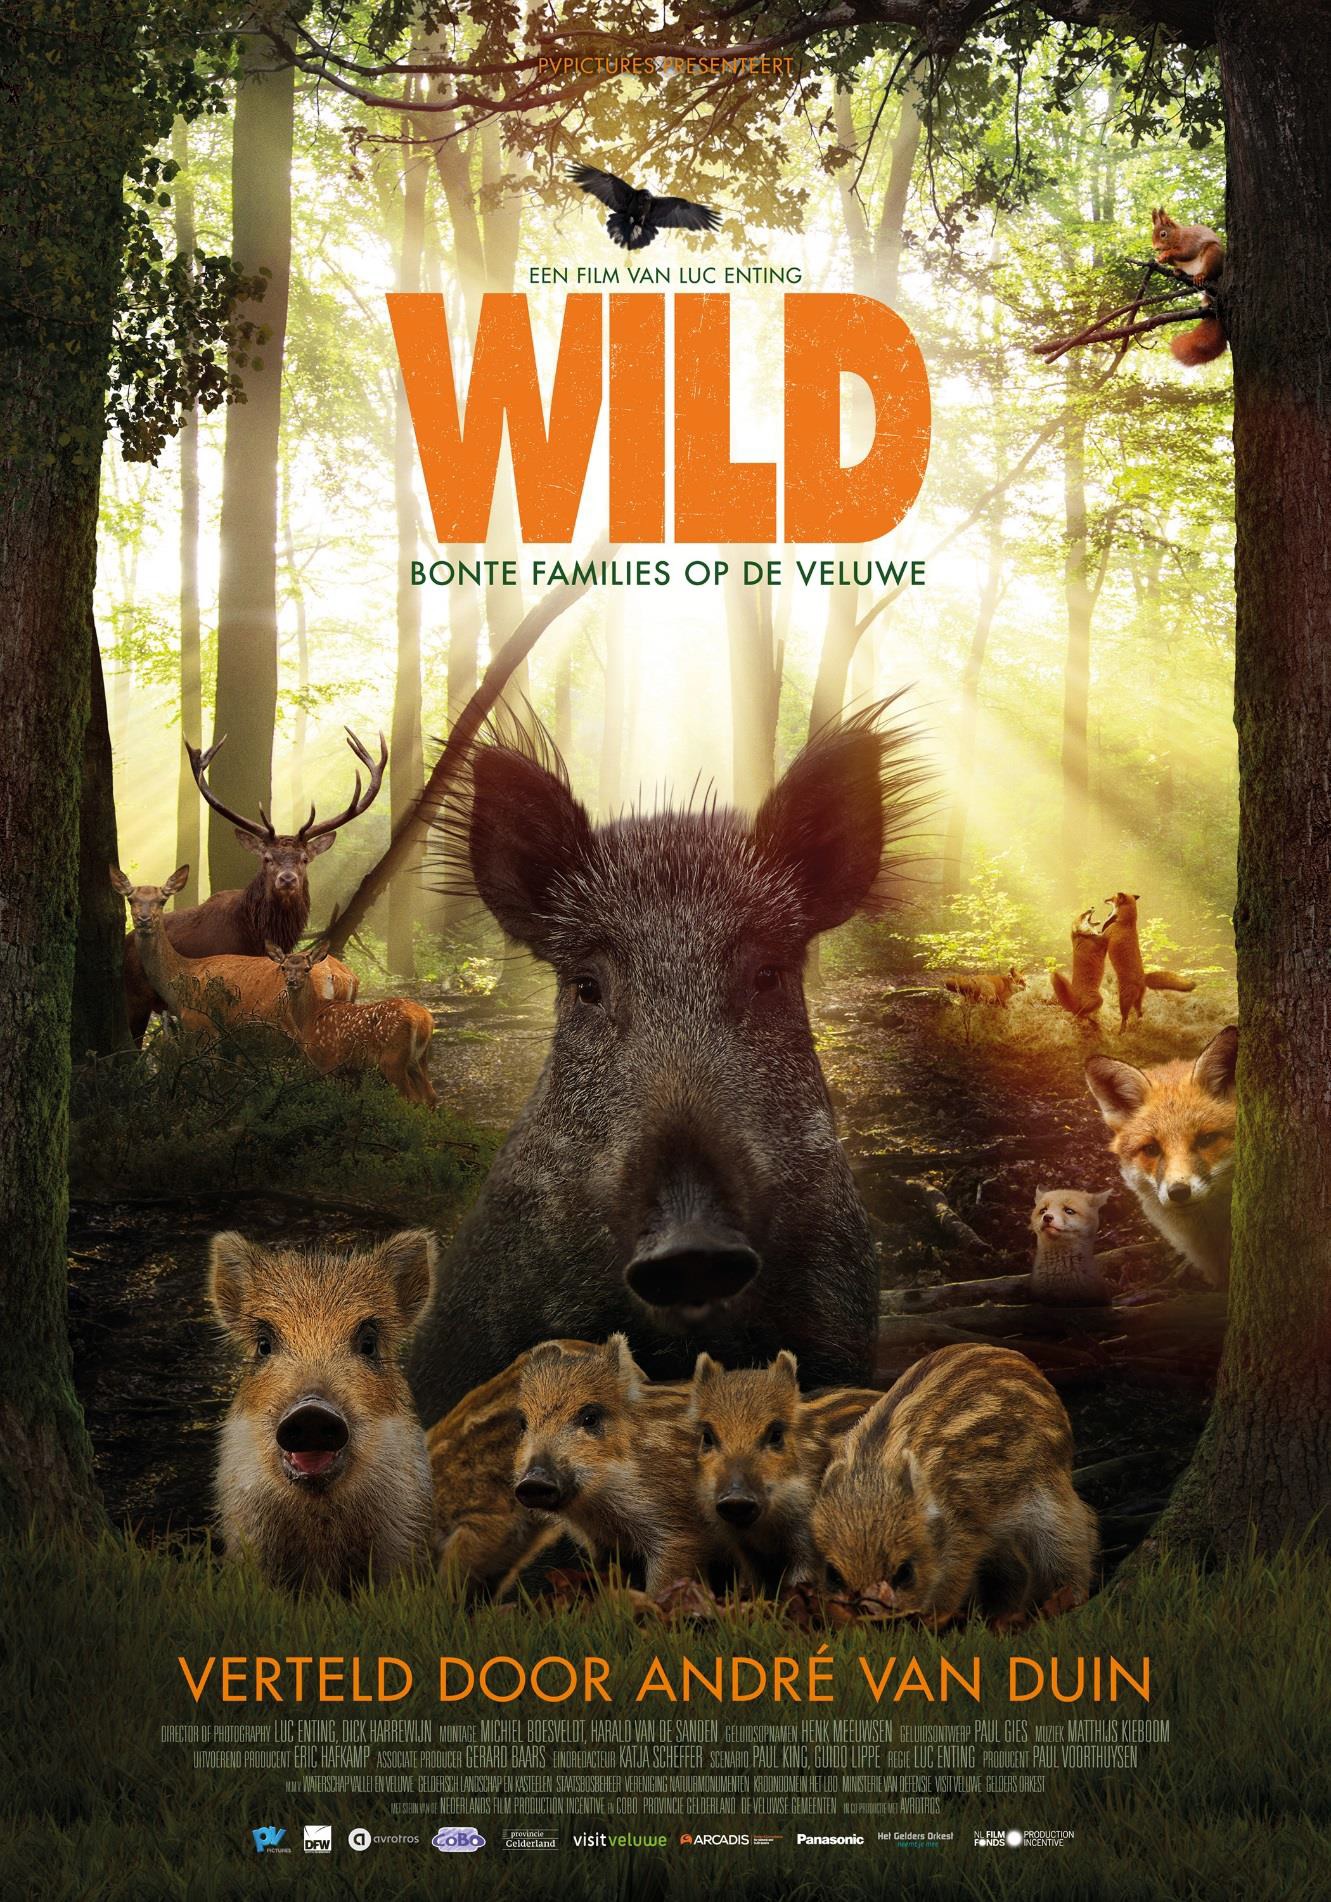 Speciale screenings Wild zaterdag 3 februari bij Pathé in Ede, Arnhem en Nijmegen